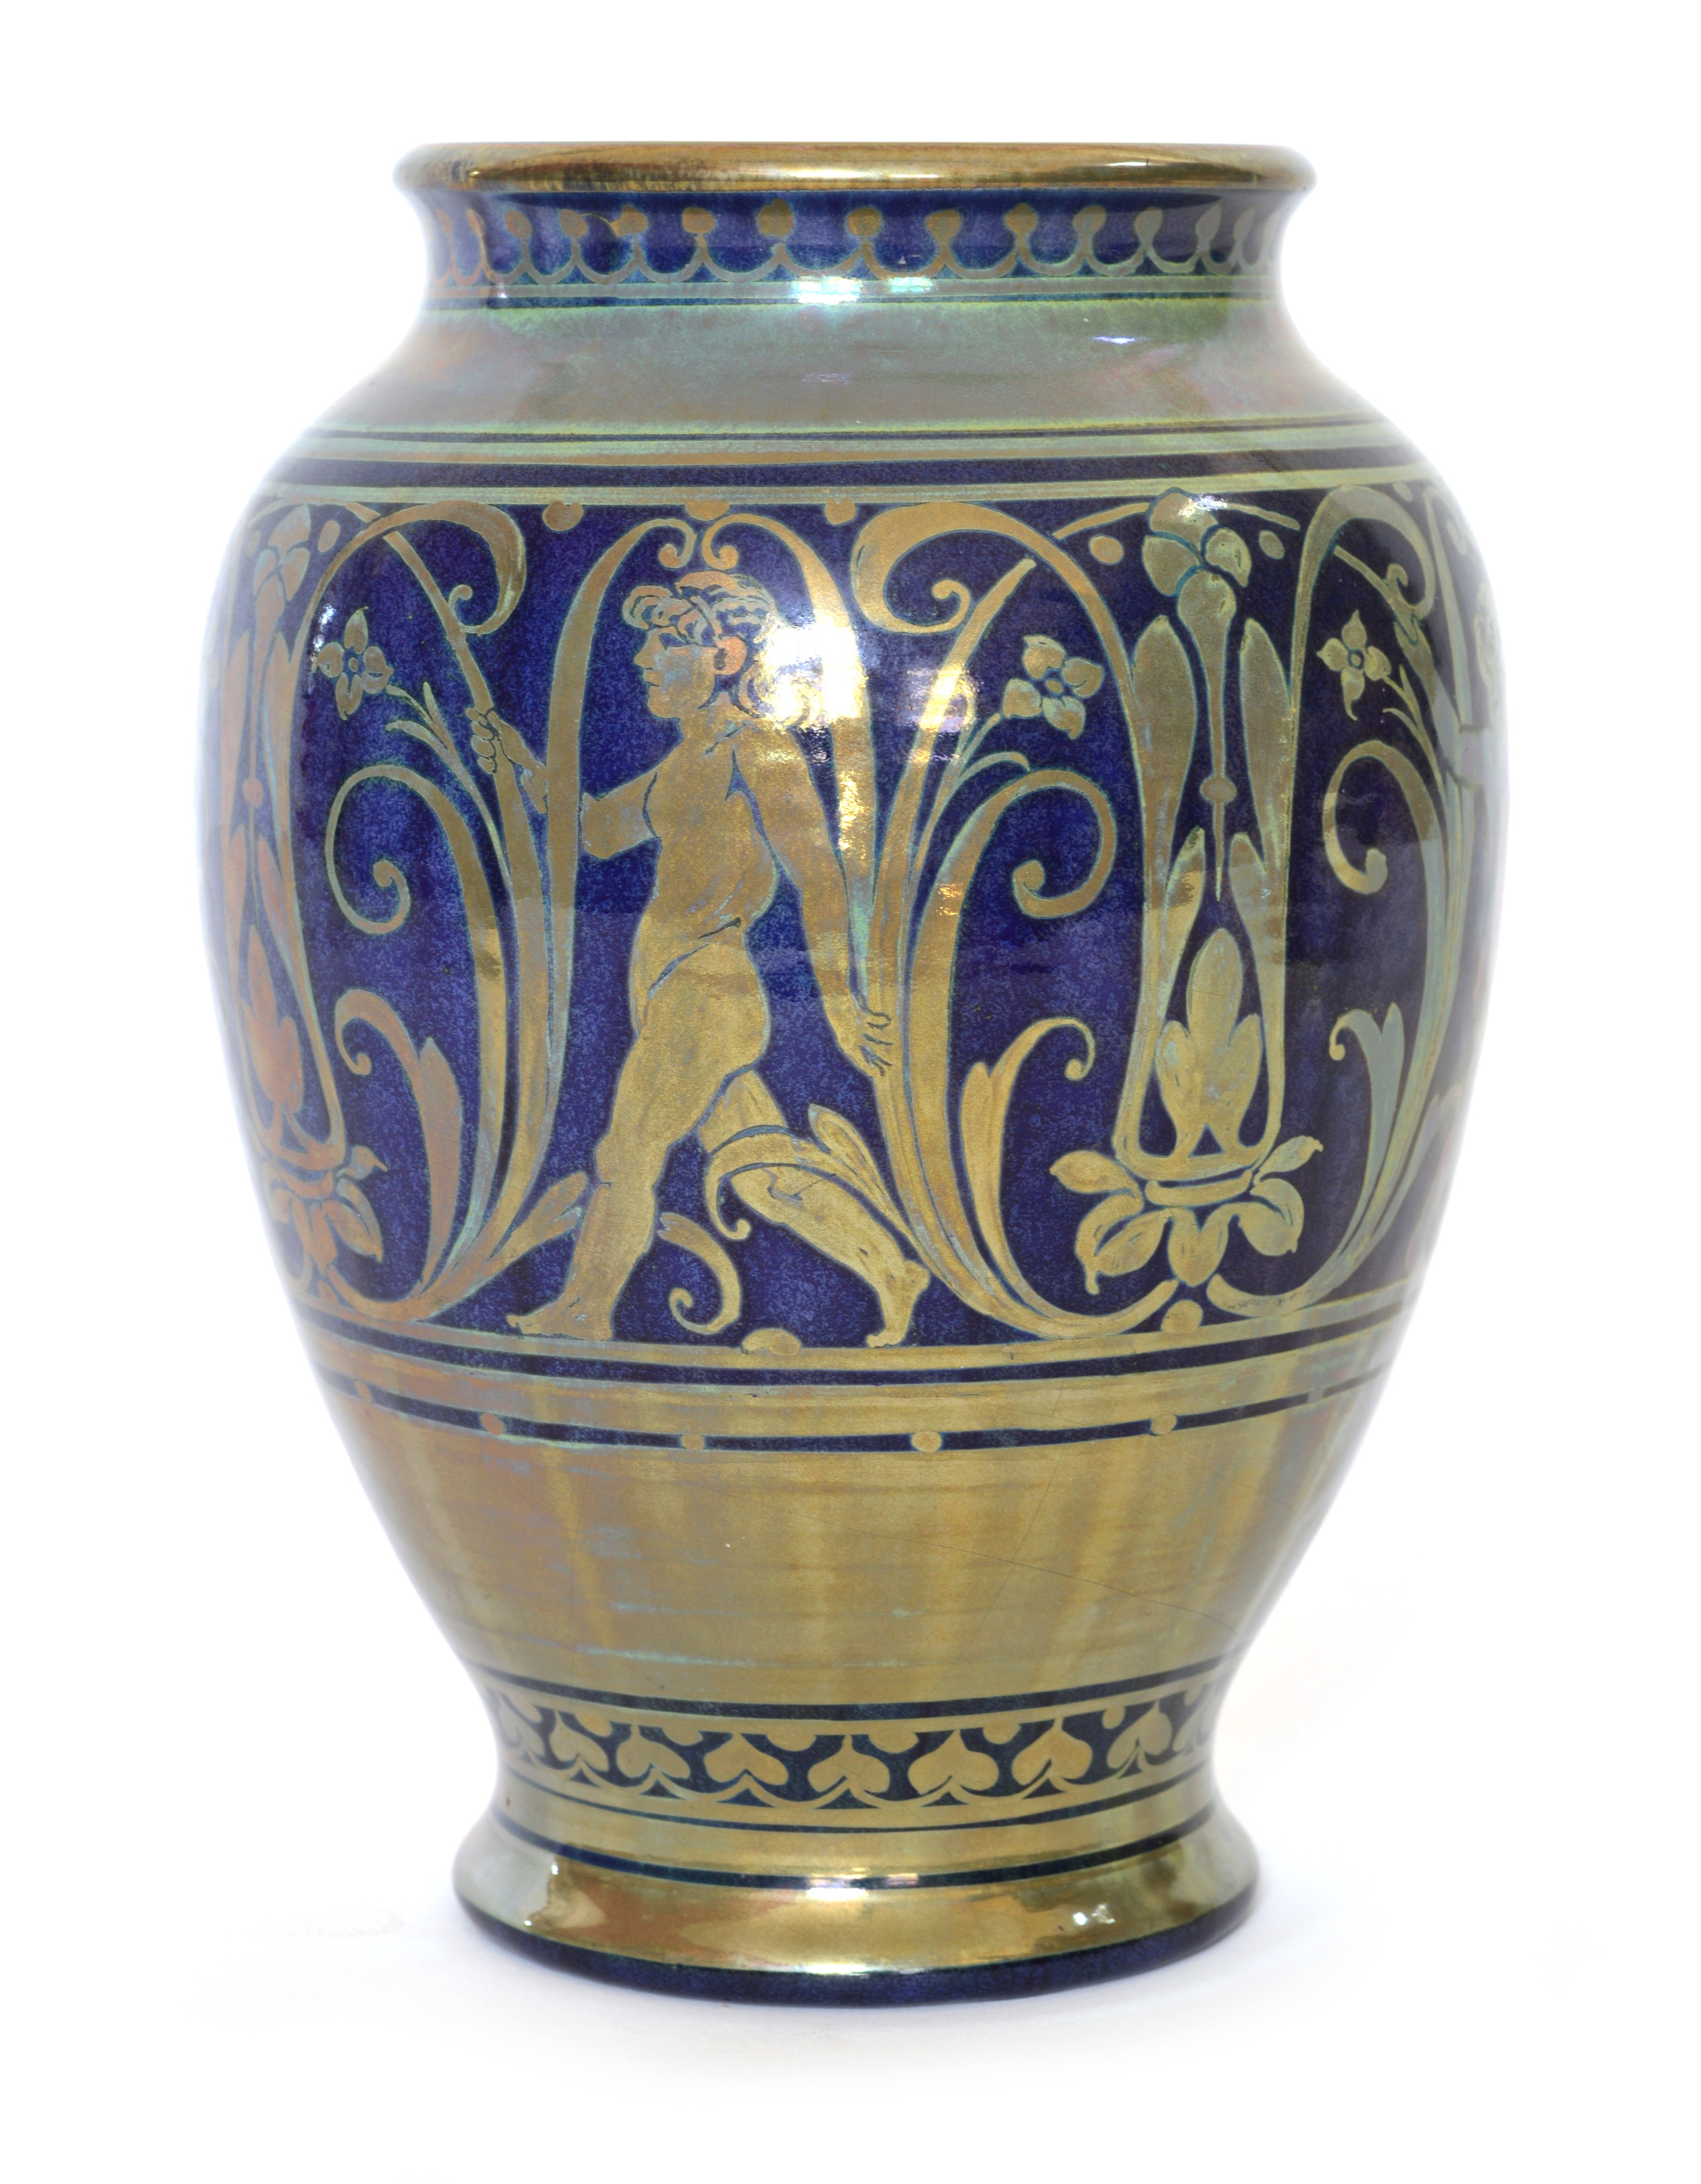 Pilkington's Royal Lancastrian lustre vase, decorated by Richard Joyce (1873-1931)